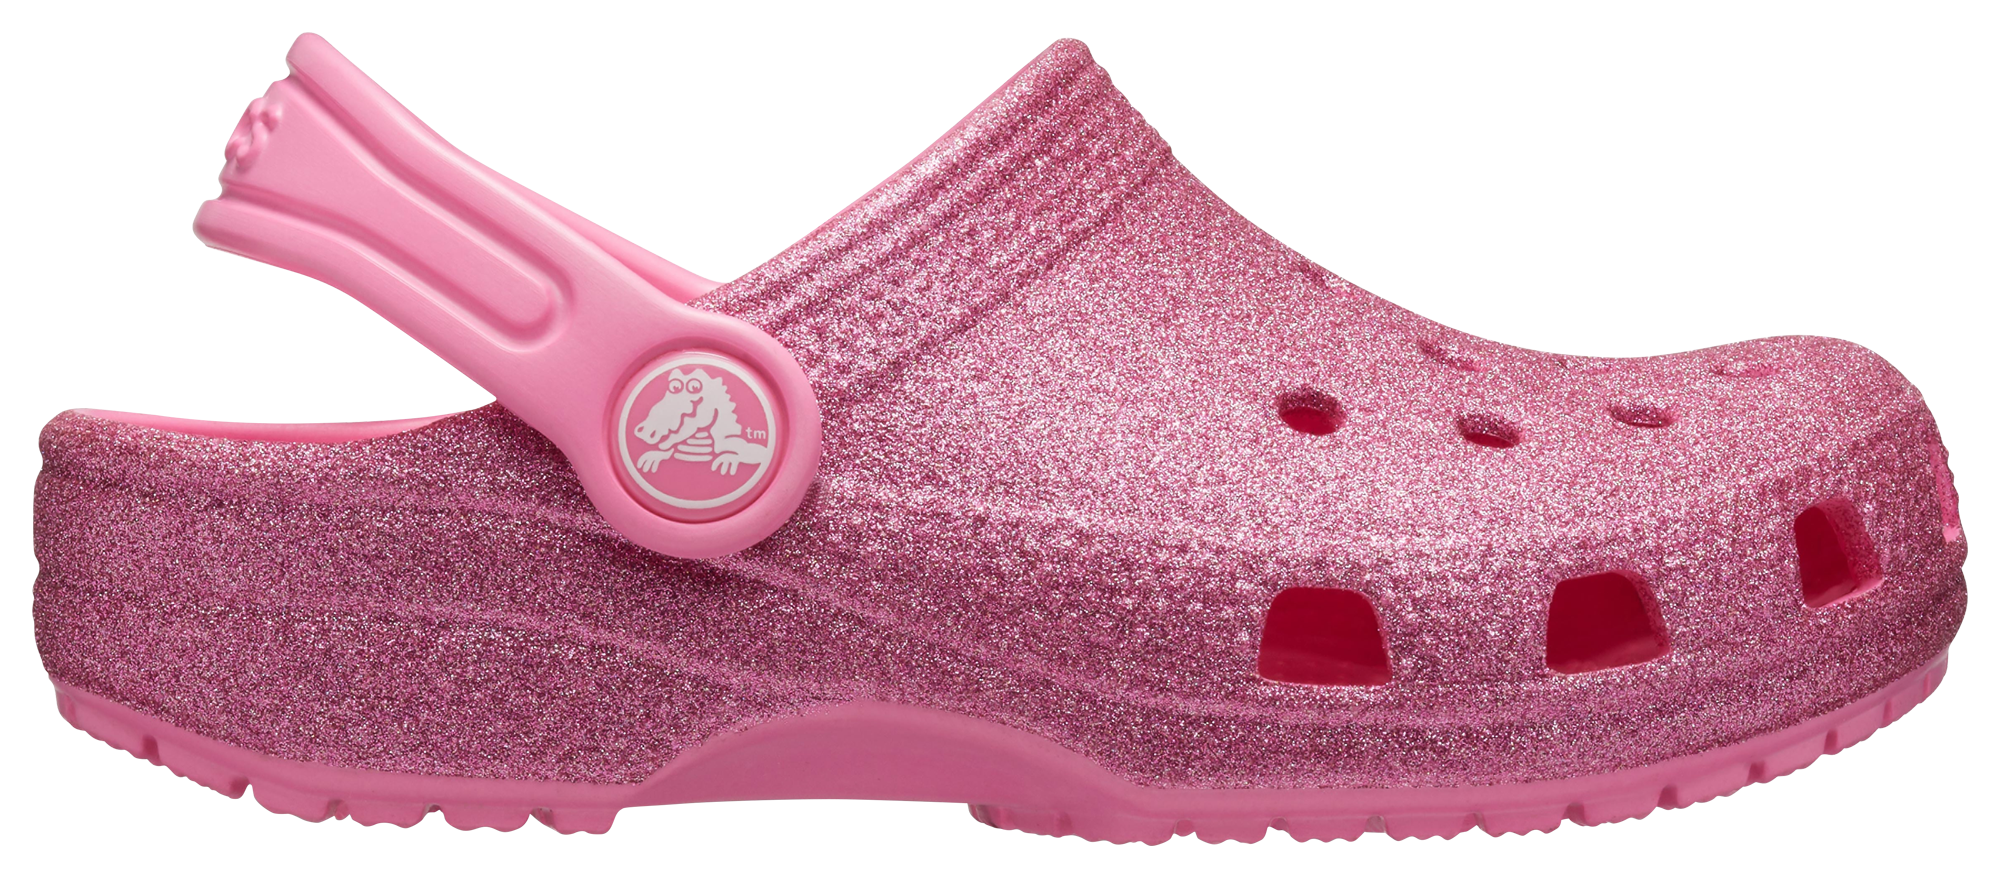 pink sparkly crocs